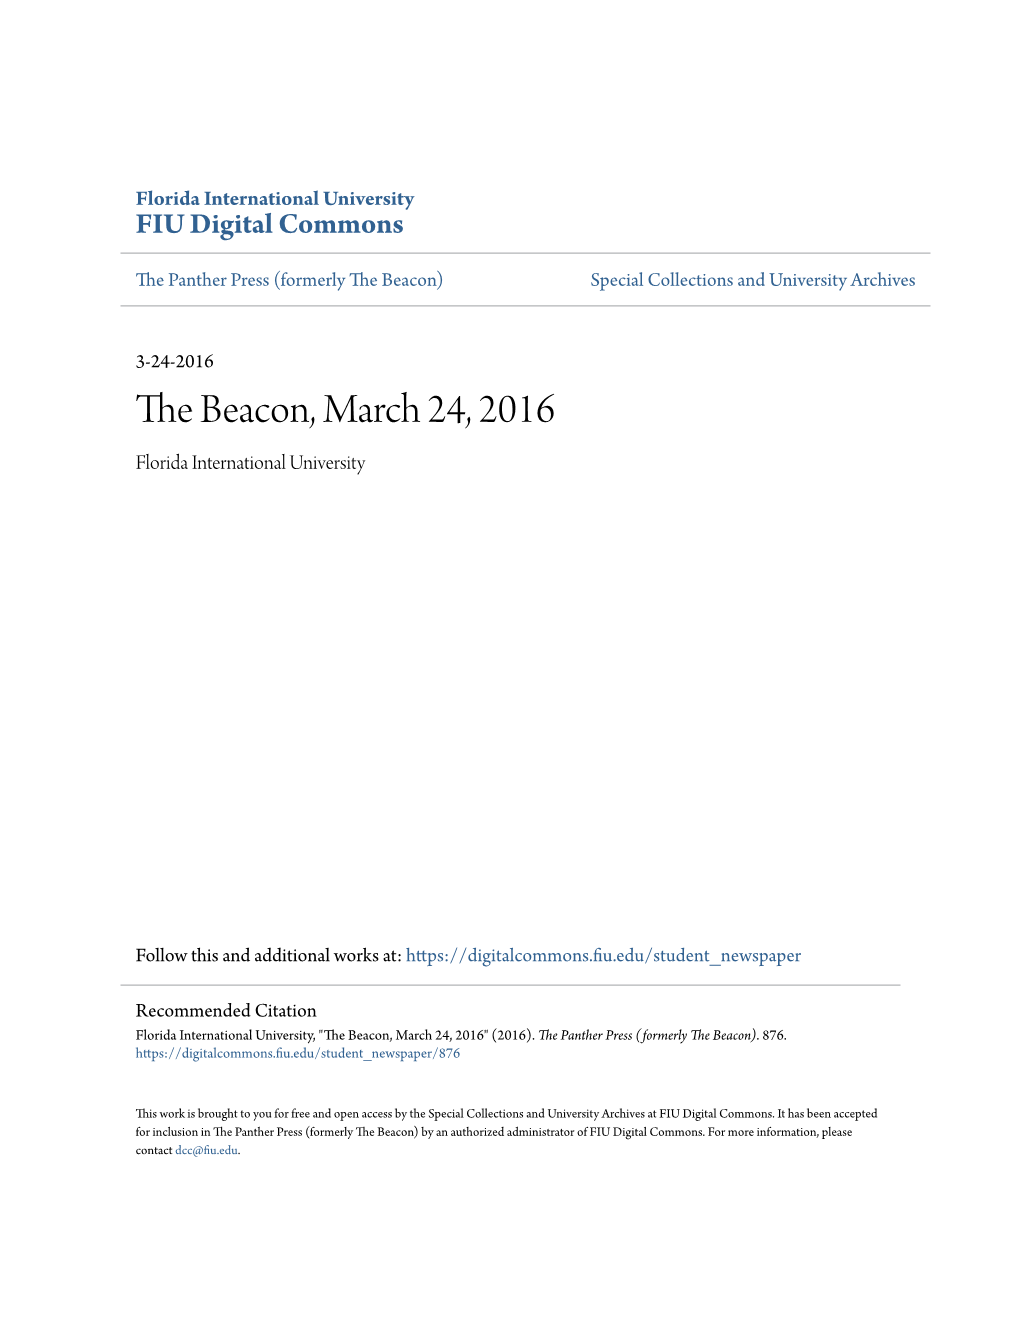 The Beacon, March 24, 2016 Florida International University